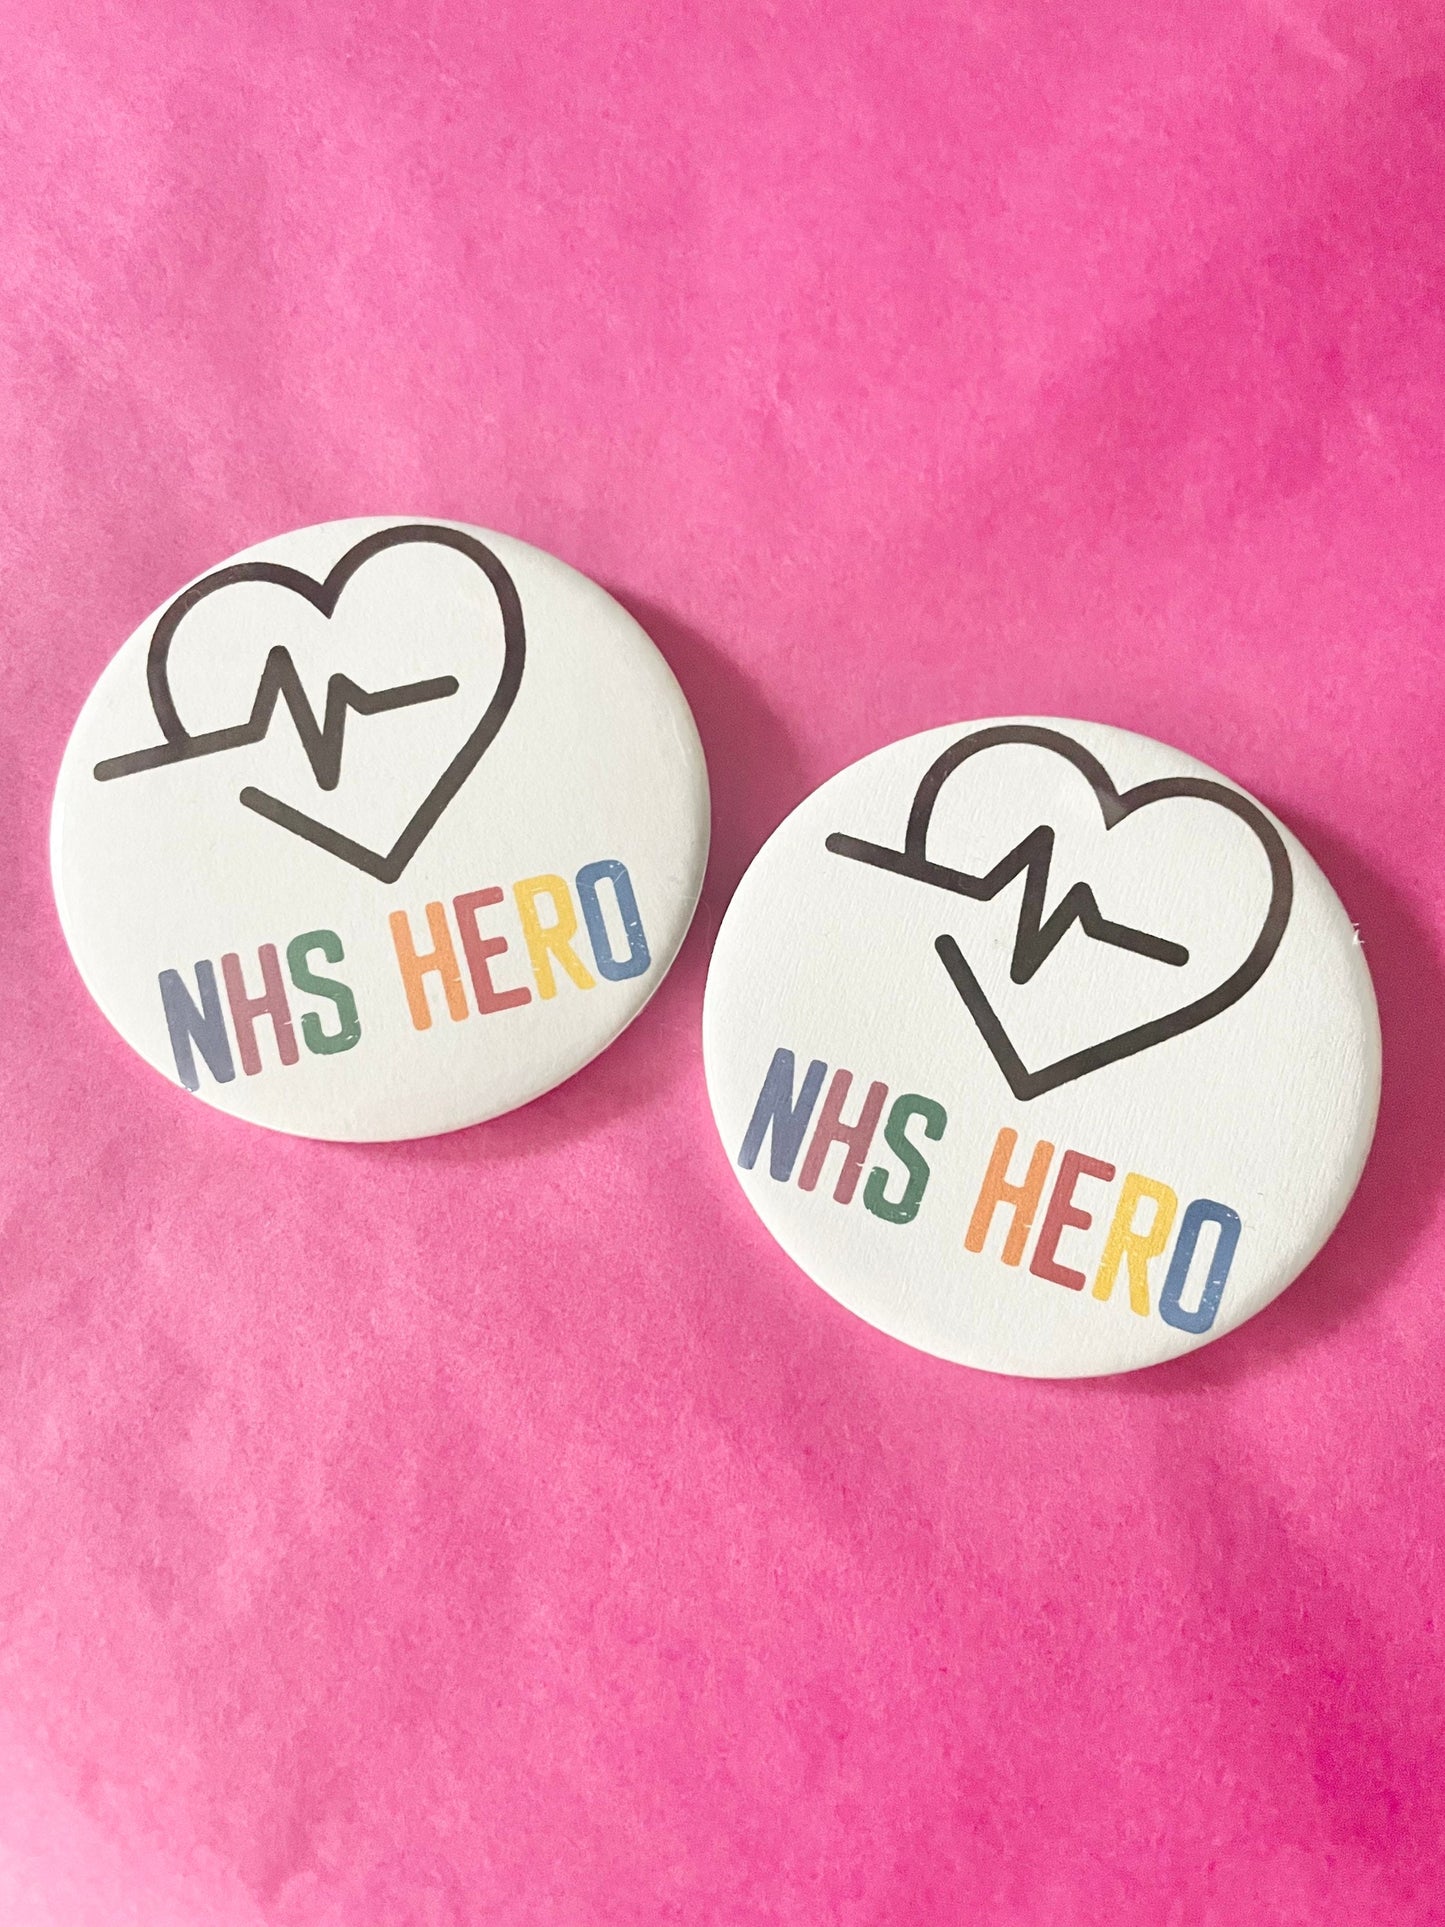 NHS hero badge, nurse badge, doctor pins, healthcare worker thank you gift, thank you nhs staff, nurse friend gift, uniform badges